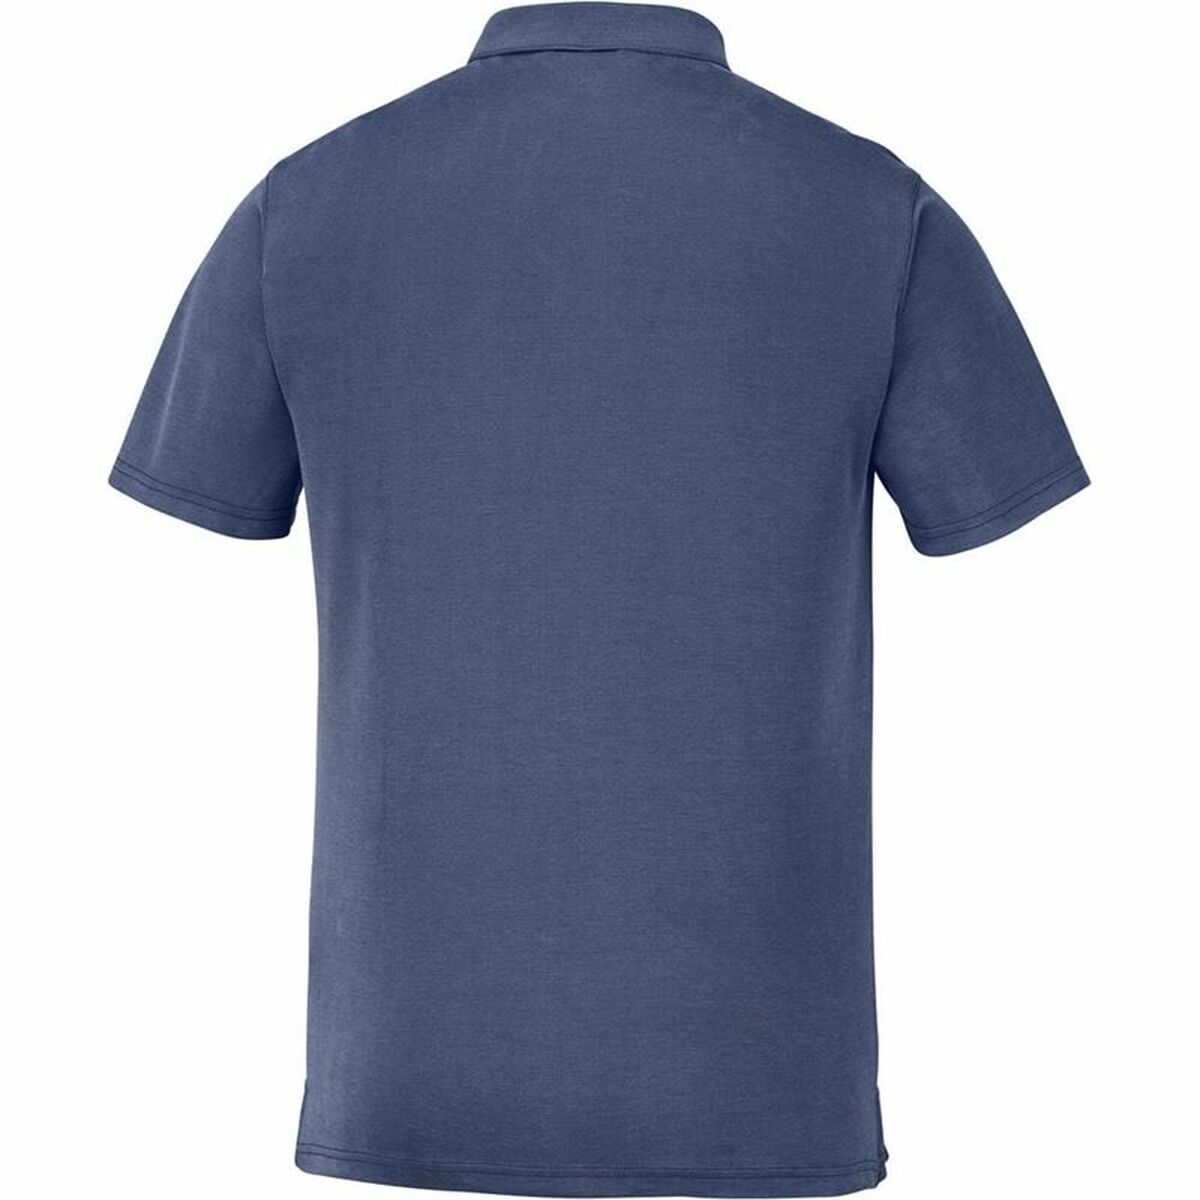 Kaufe Herren Kurzarm-Poloshirt Columbia Nelson Point™ Blau bei AWK Flagship um € 56.00